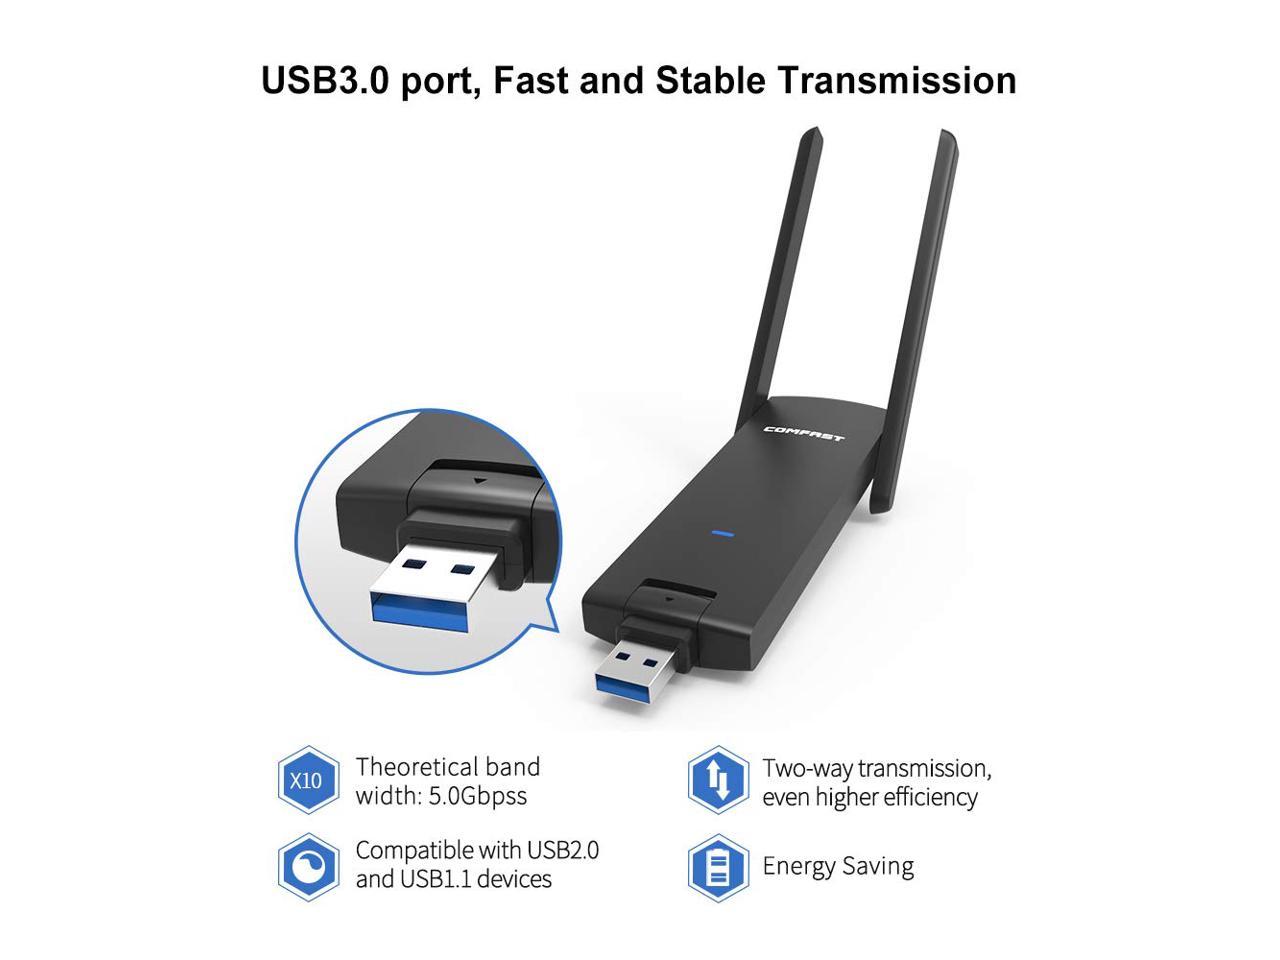 1900Mbps WiFi Dongle USB 3.0 Dual Band Wireless Adattatore di Rete con 5.8G/2.4G 5dBi 2X Antenna per PC/Desktop/Laptop/Tablet MERIGLARE Adattatore WiFi USB